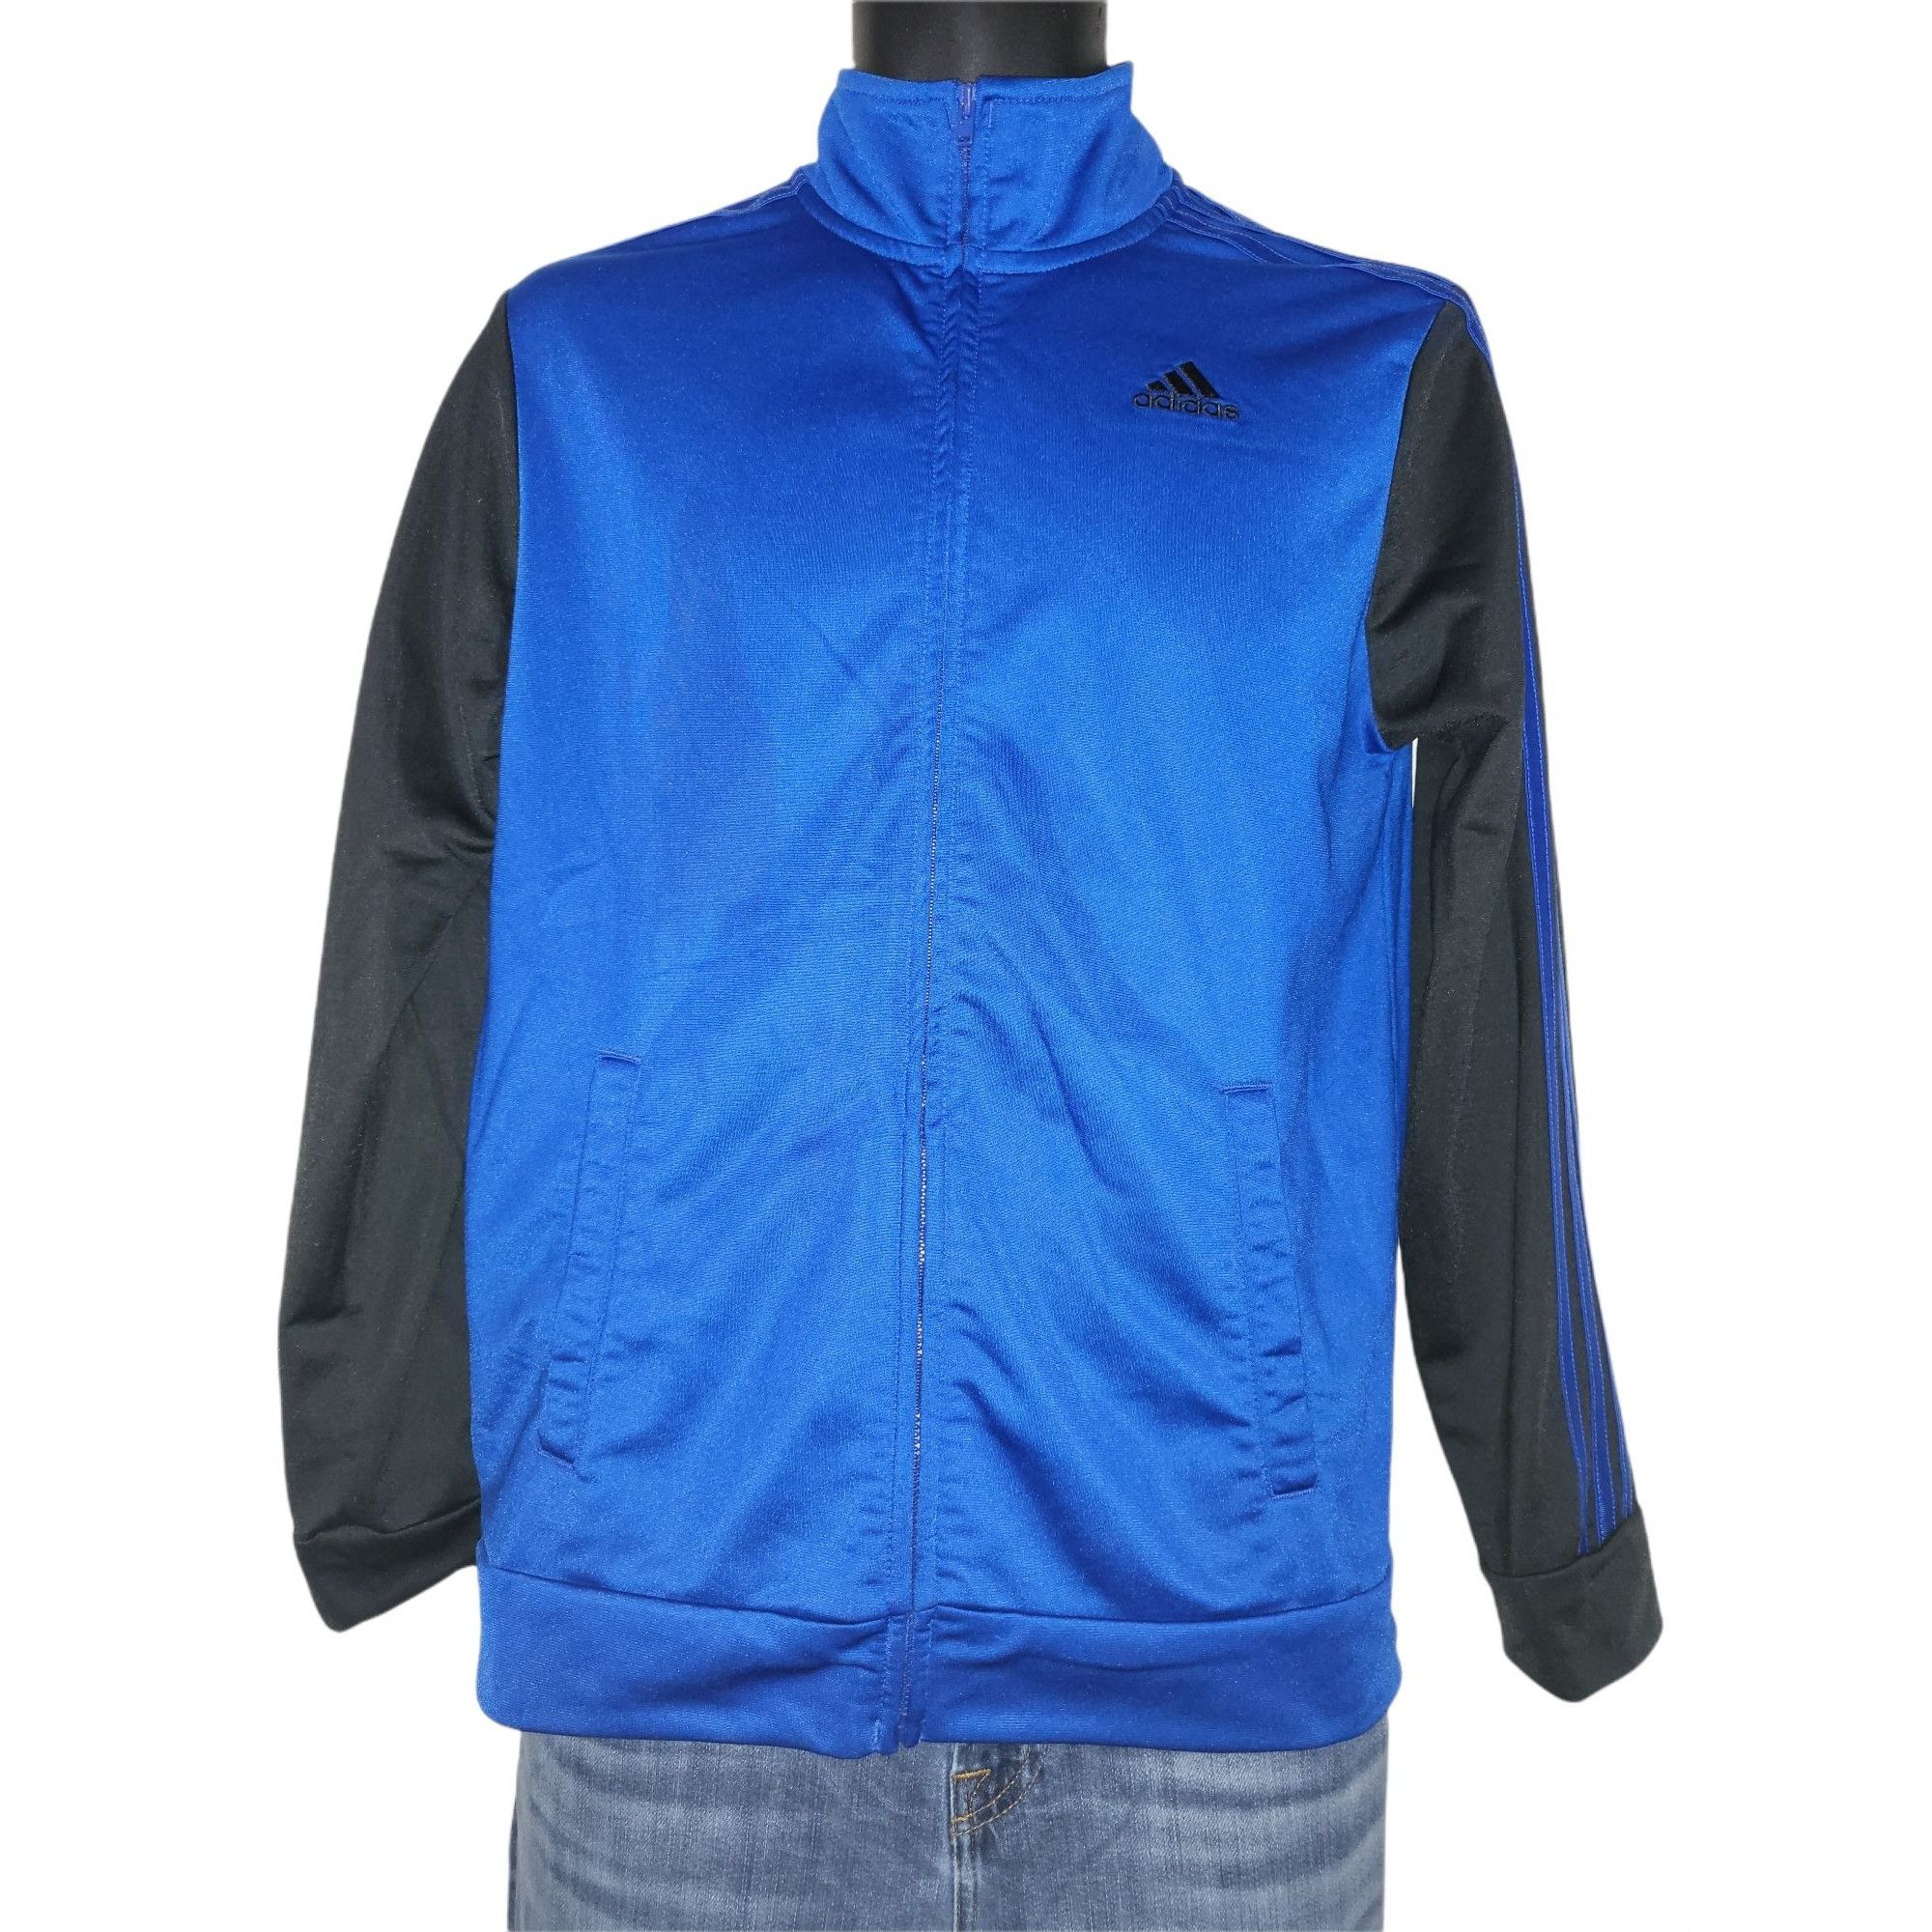 Adidas Adidas Blue Long Sleeve Striped Sz XL 18 / 20 Track Jacket W Size XL / US 12-14 / IT 48-50 - 1 Preview